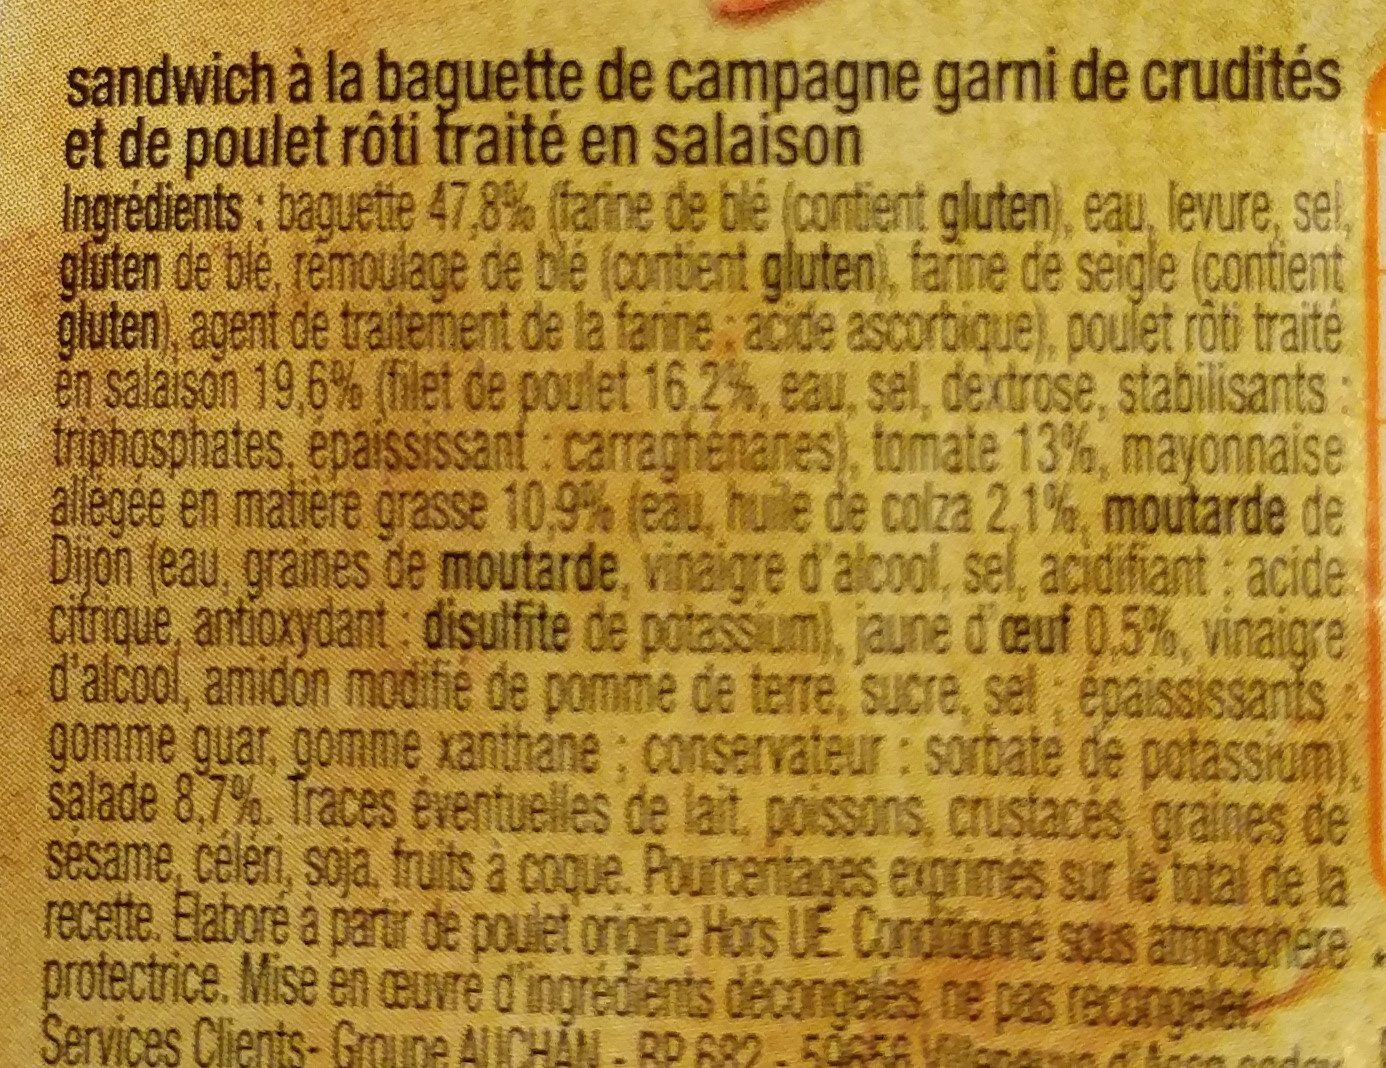 Pause snack - Sandwich Poulet Crudités baguette campagne - Ingrediënten - fr